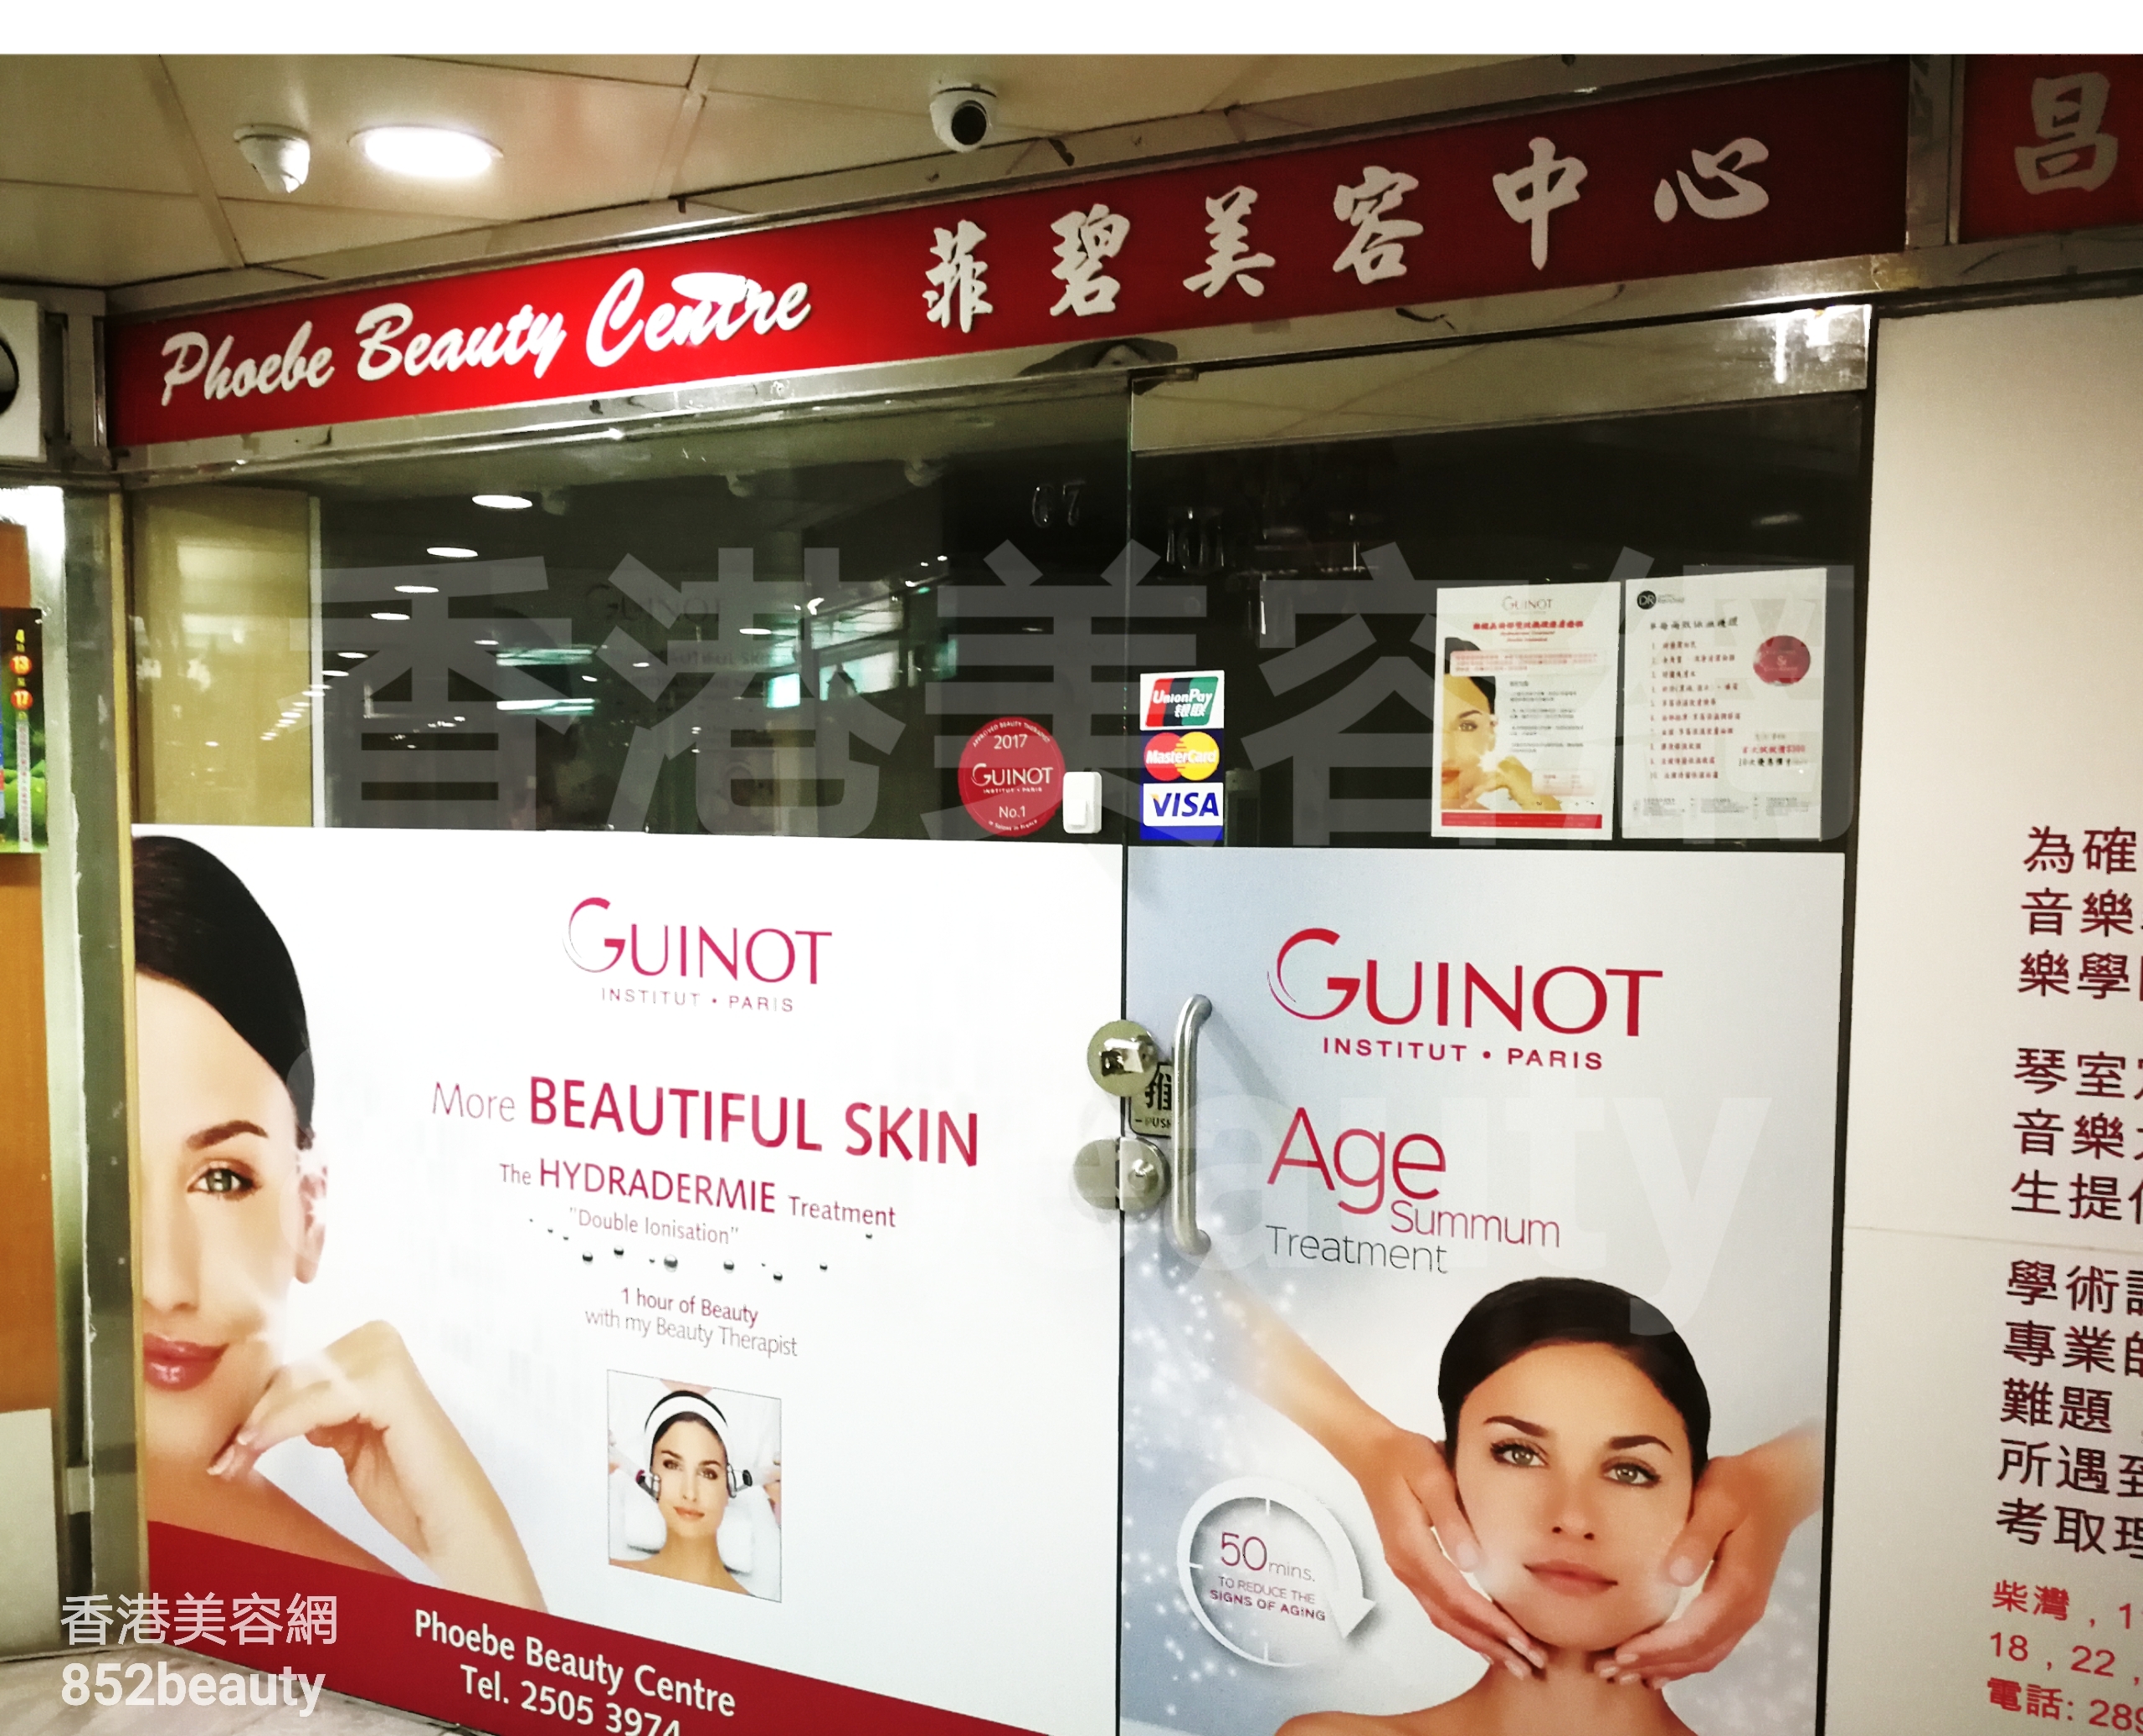 Facial Care: Phoebe Beauty Centre